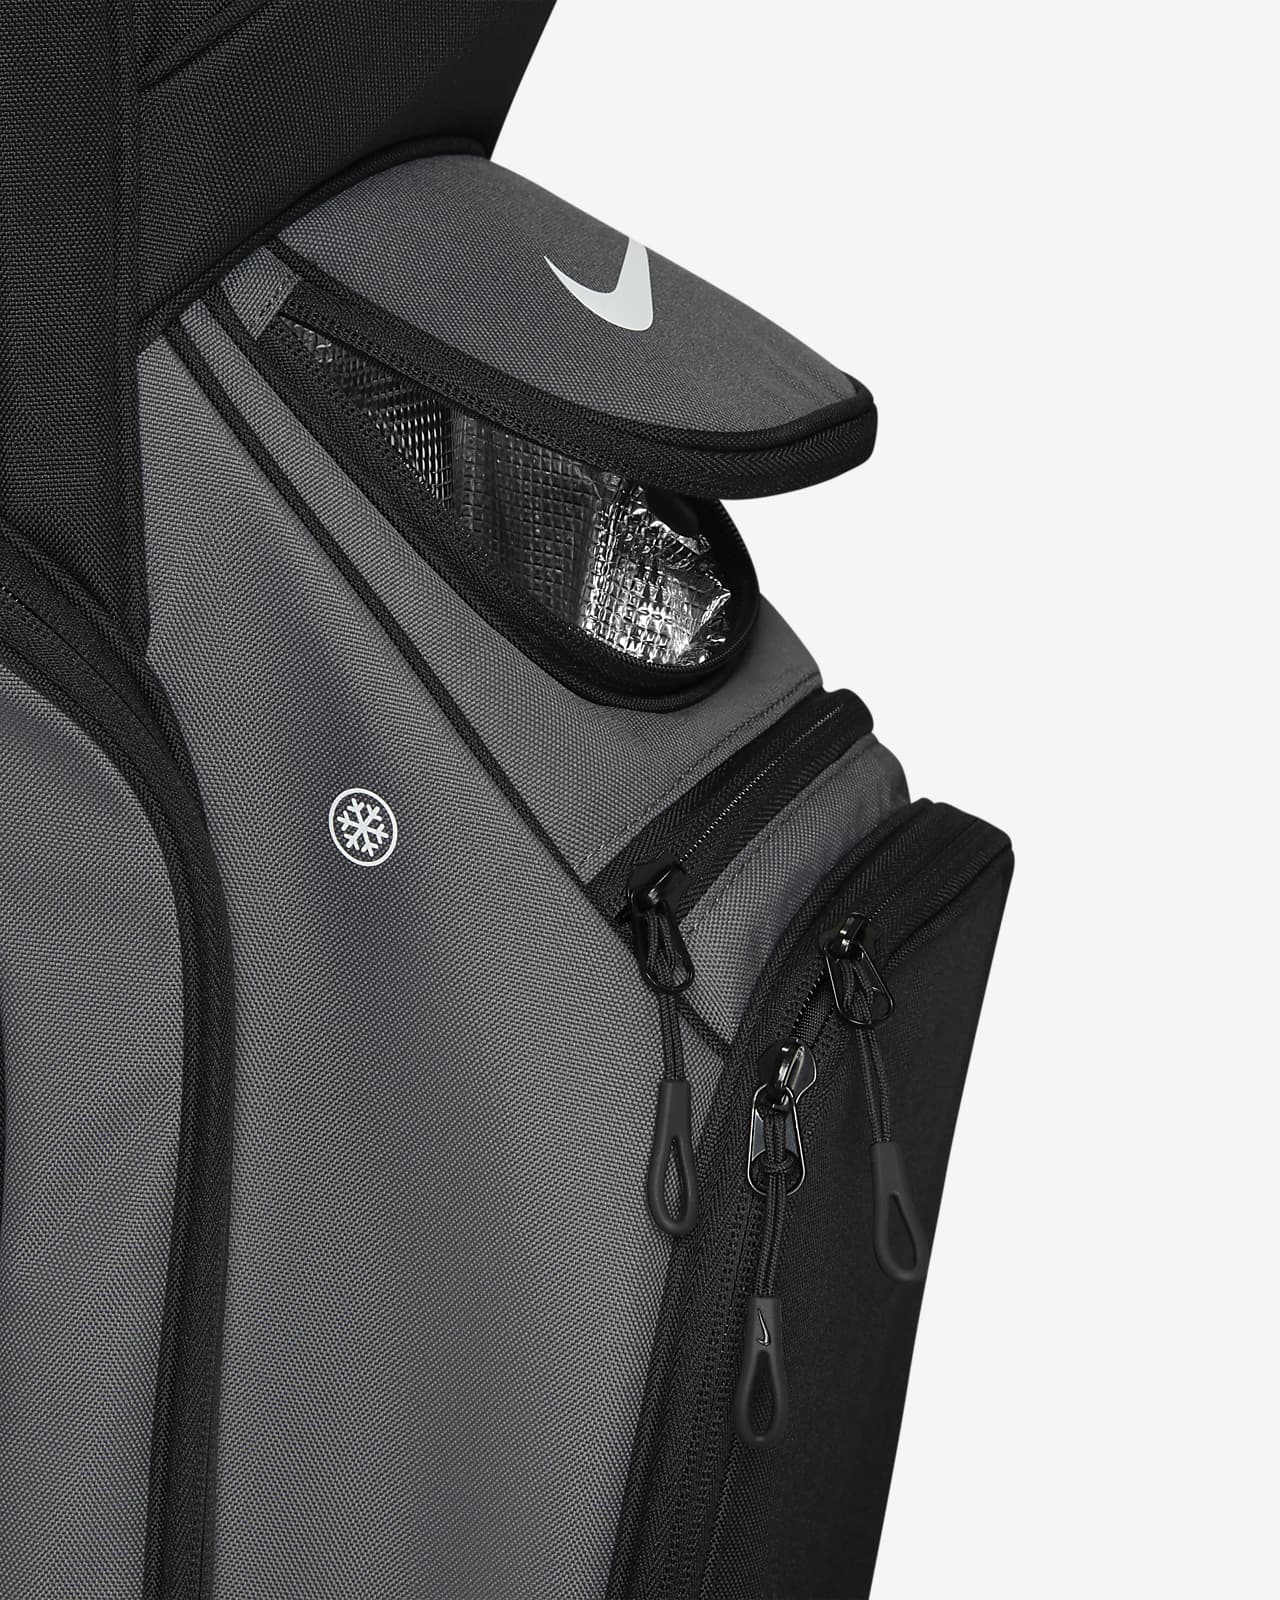 Nike Cart Golf Bag. LU